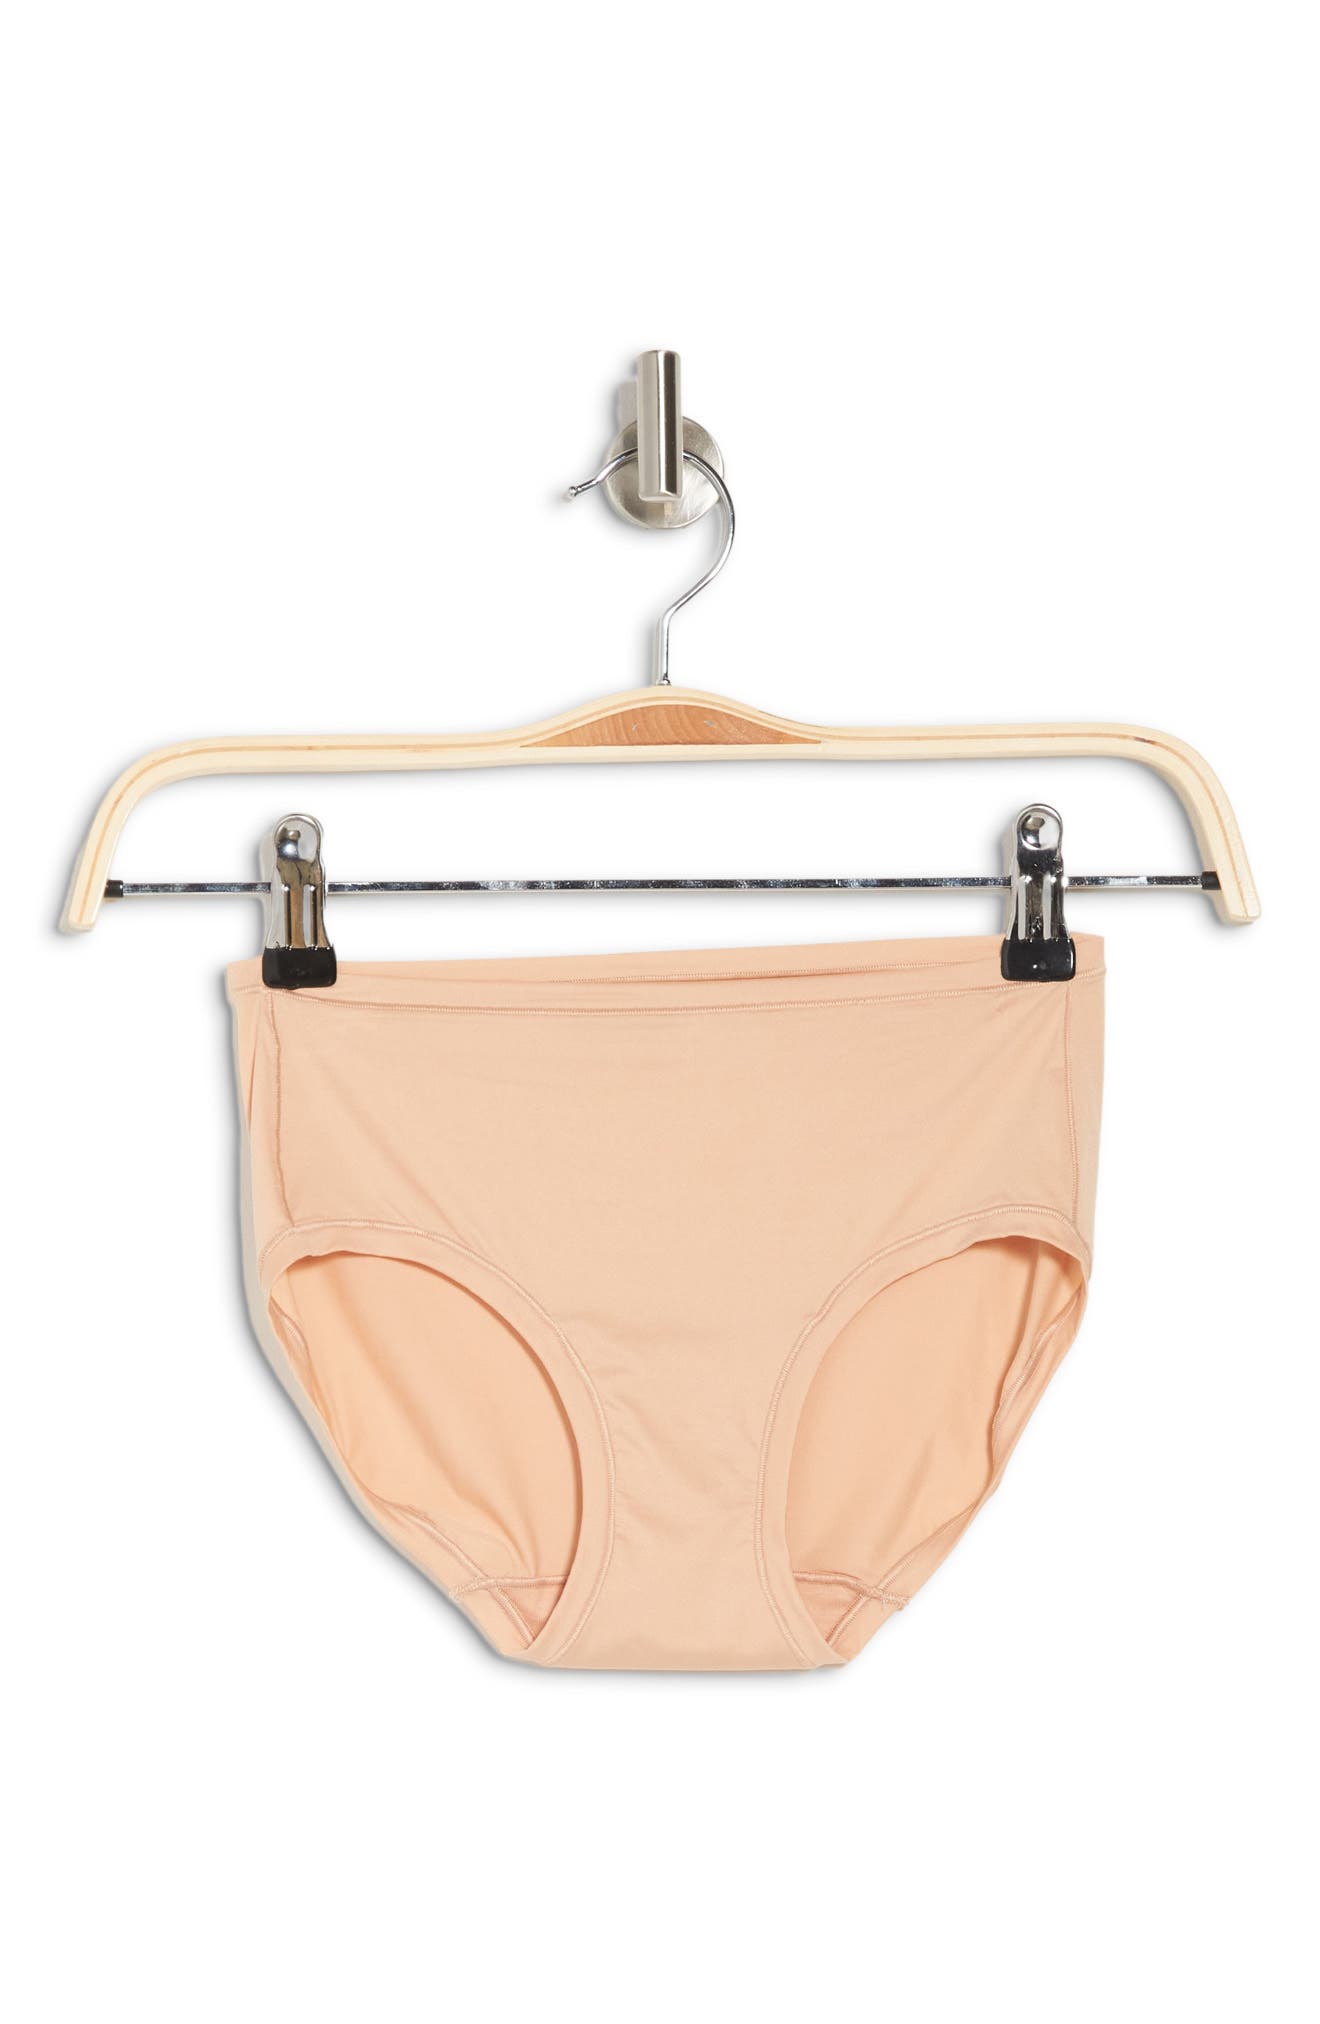 Women's Jockey No Panty Line Promise 3-Pack Bikini Panty Set 1770, Size: 8,  Brt Red - Yahoo Shopping